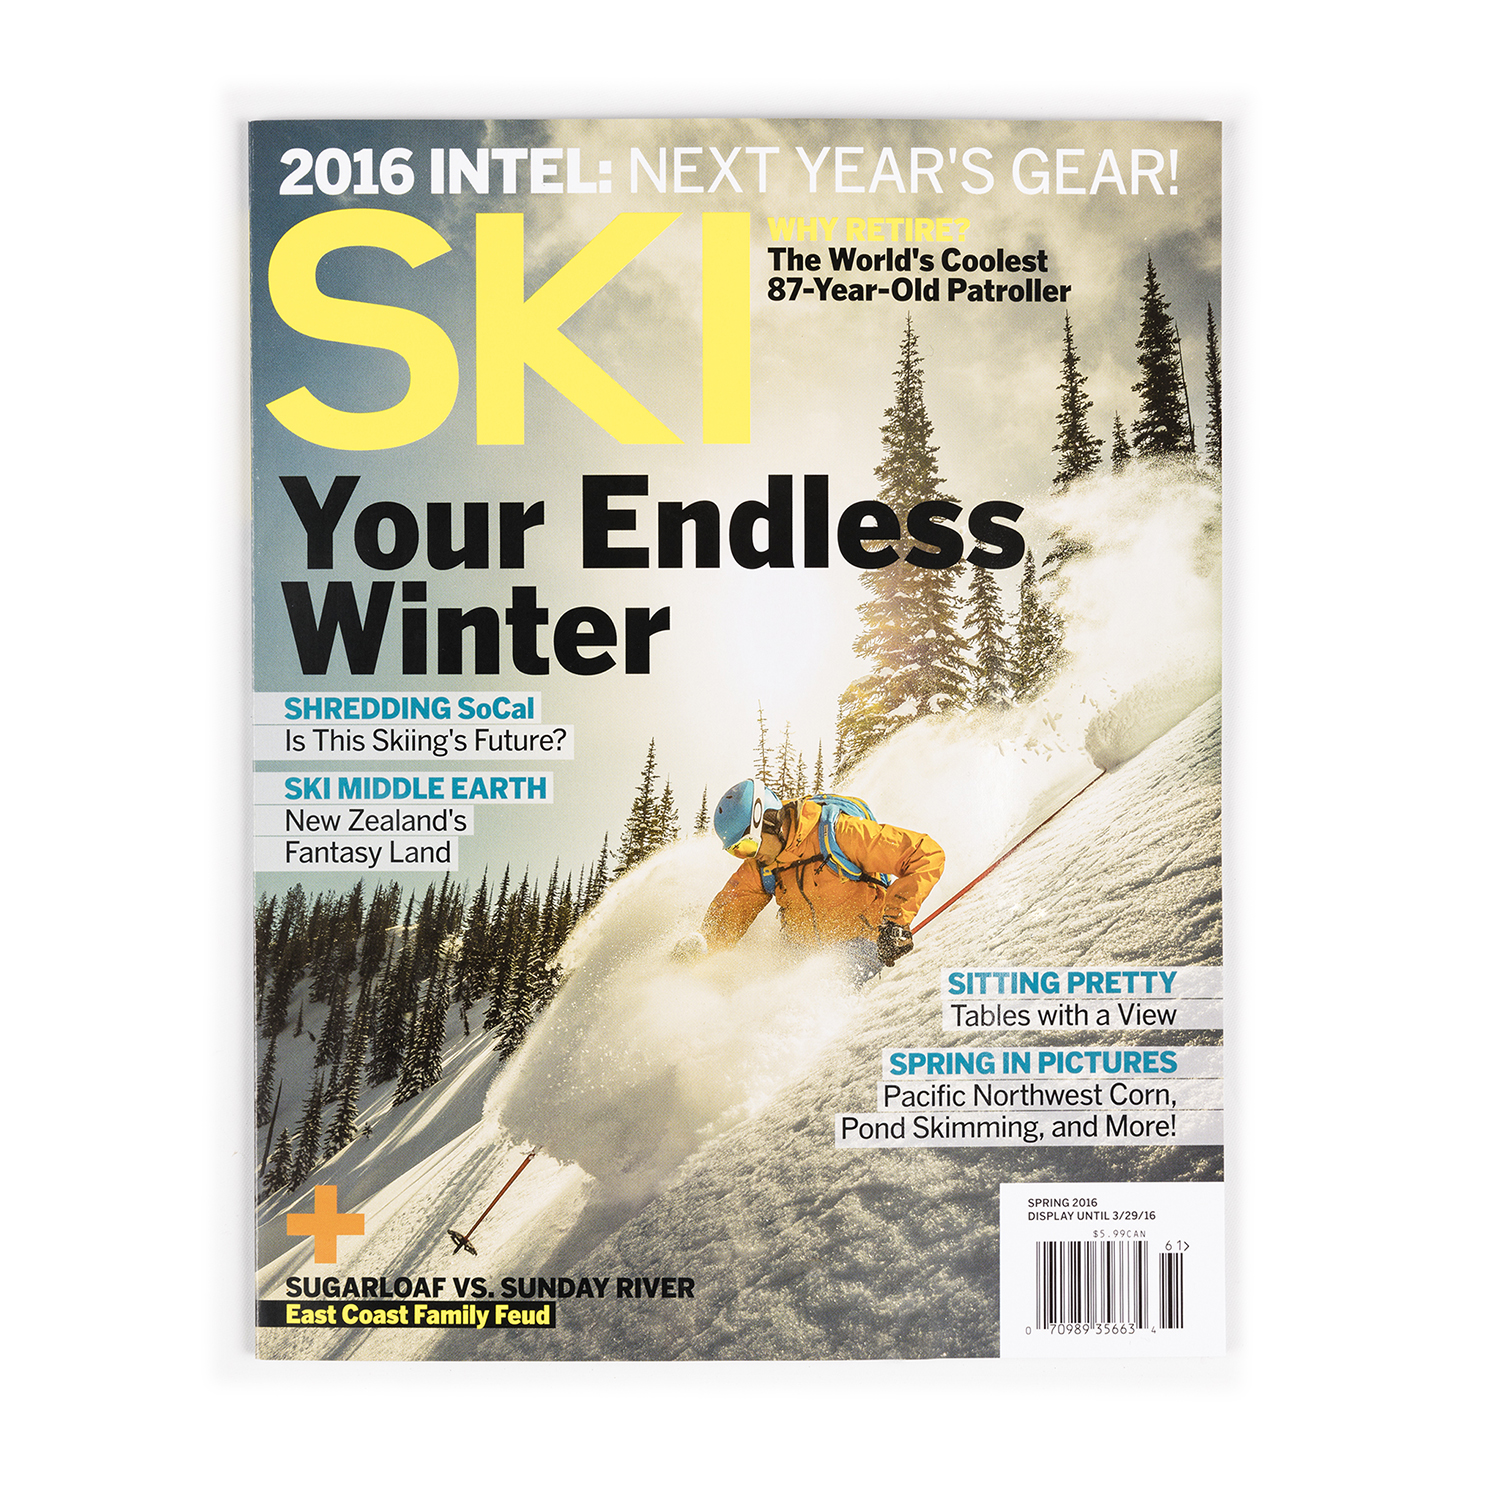 Valhalla Powdercats on the Cover of Ski Magazine!